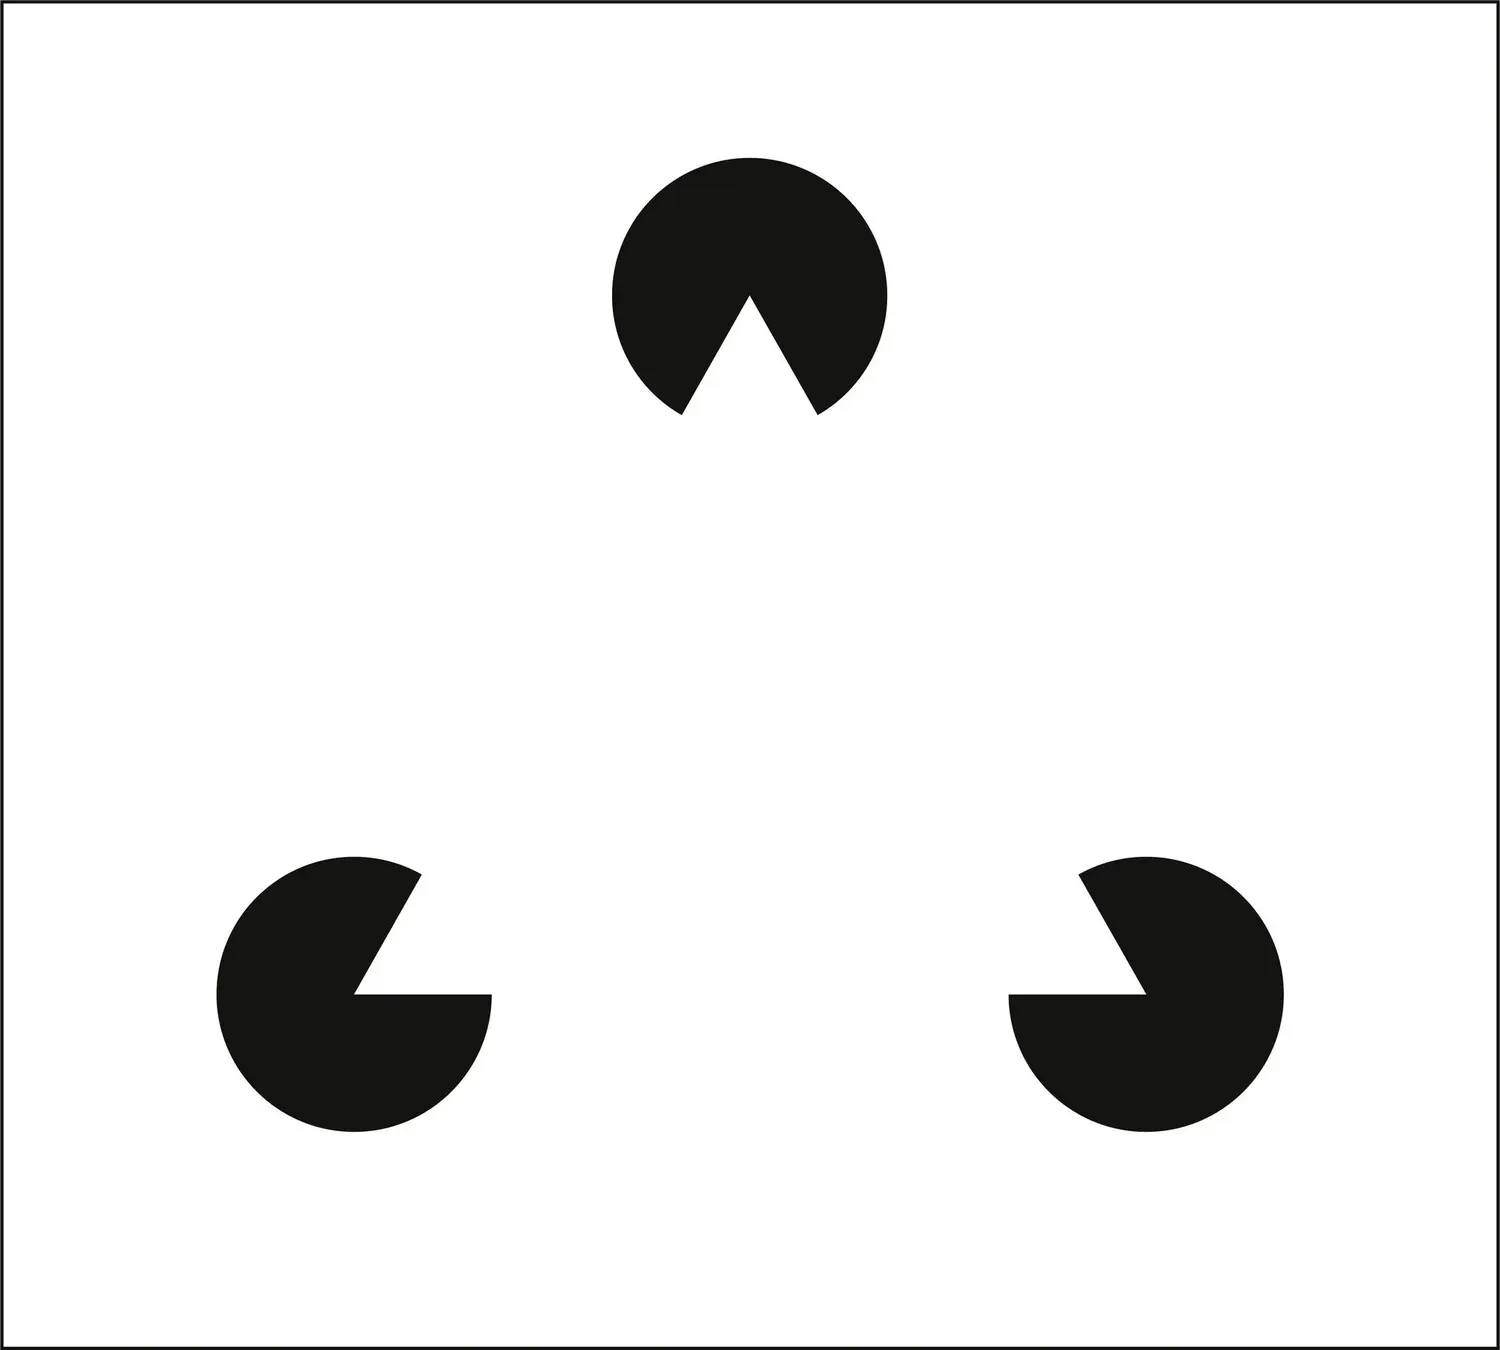 Triangle de Kanizsa